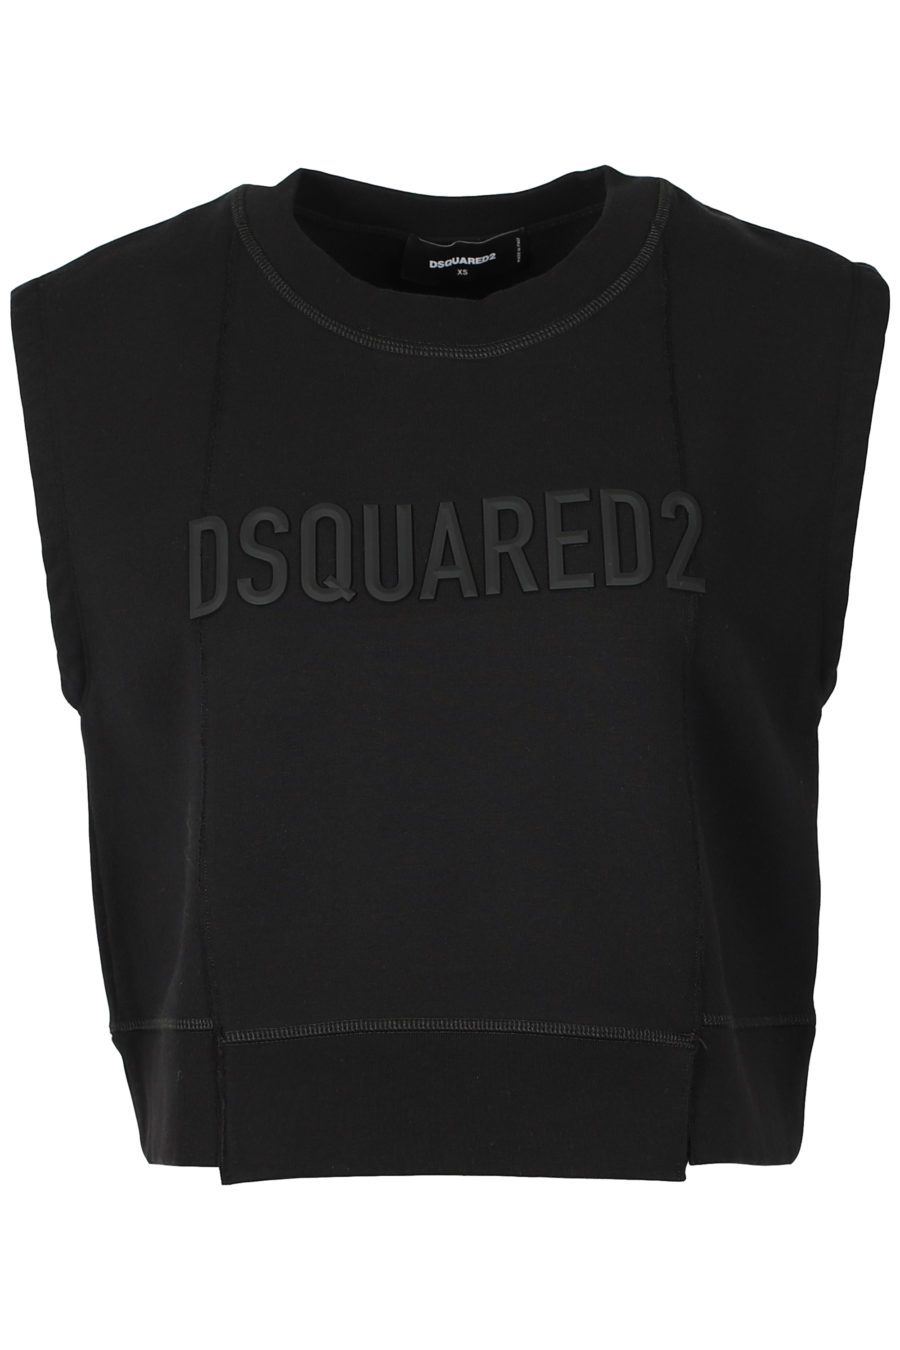 Camiseta negra sin mangas con logo engomado - IMG 3240